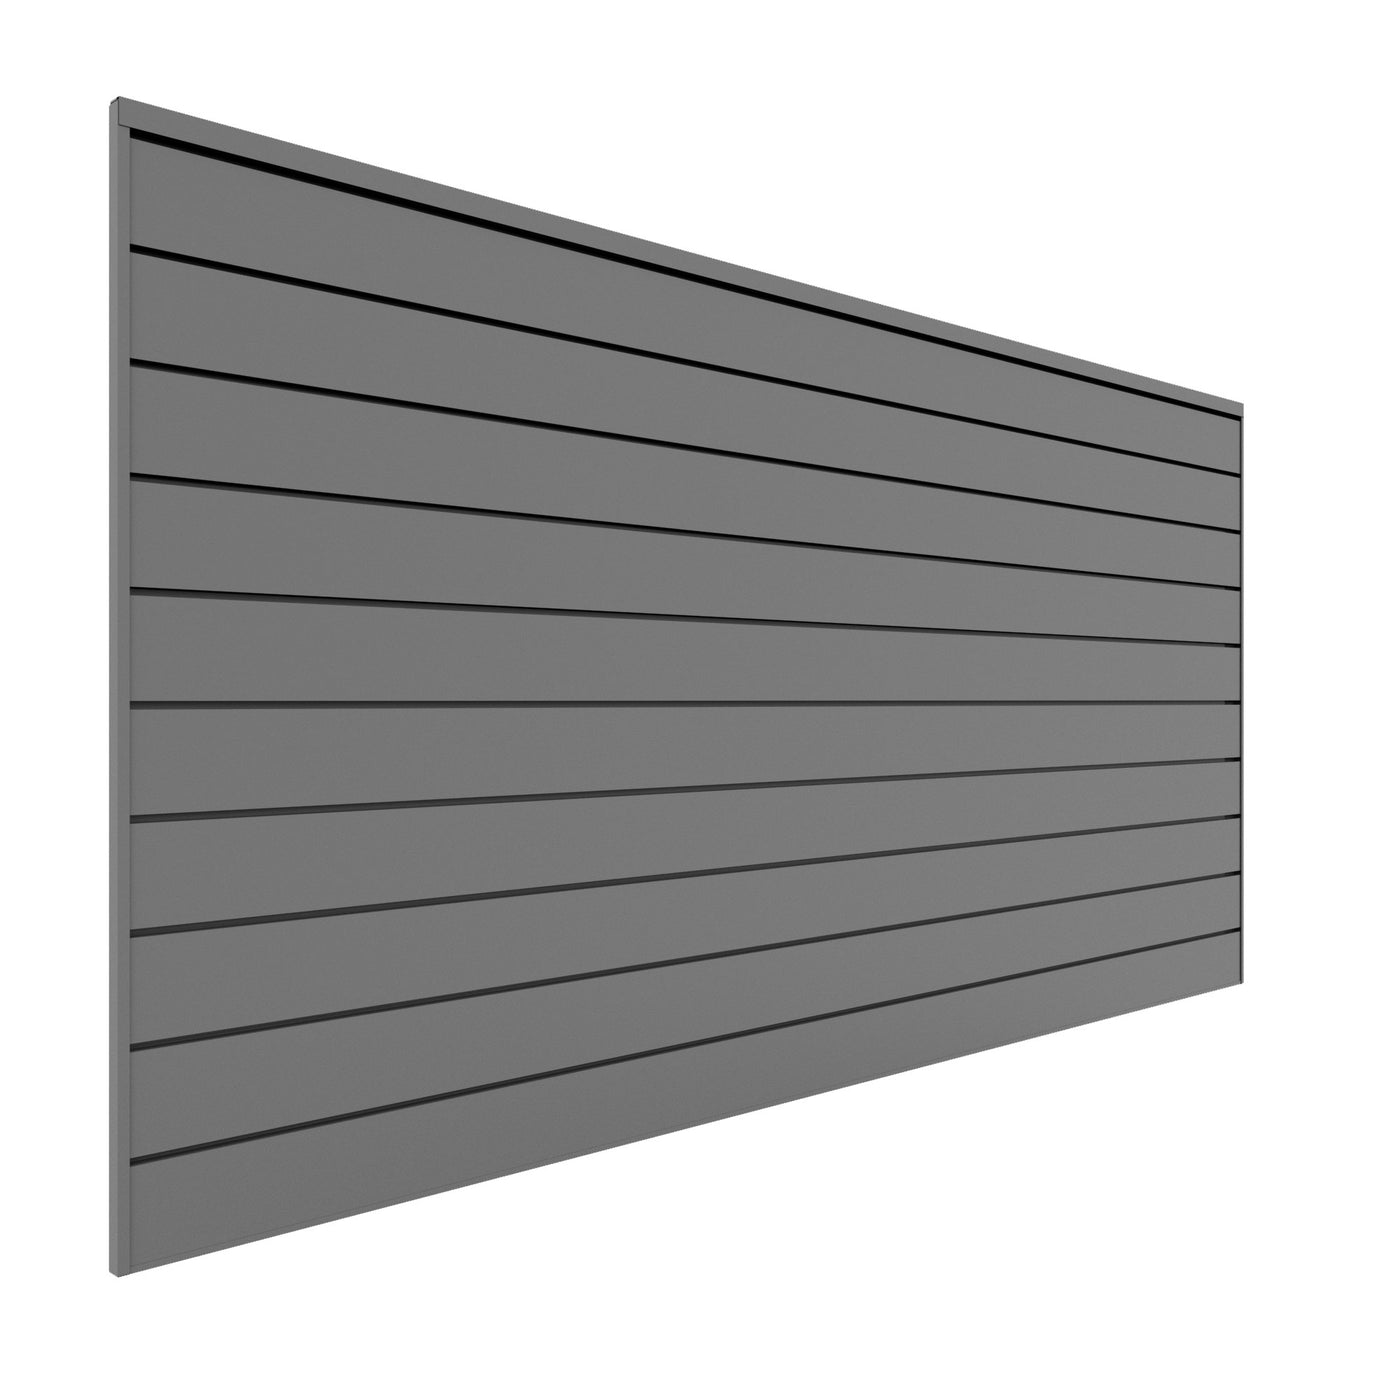 Proslat PVC Slatwall Panels - The Versatile and Durable Choice